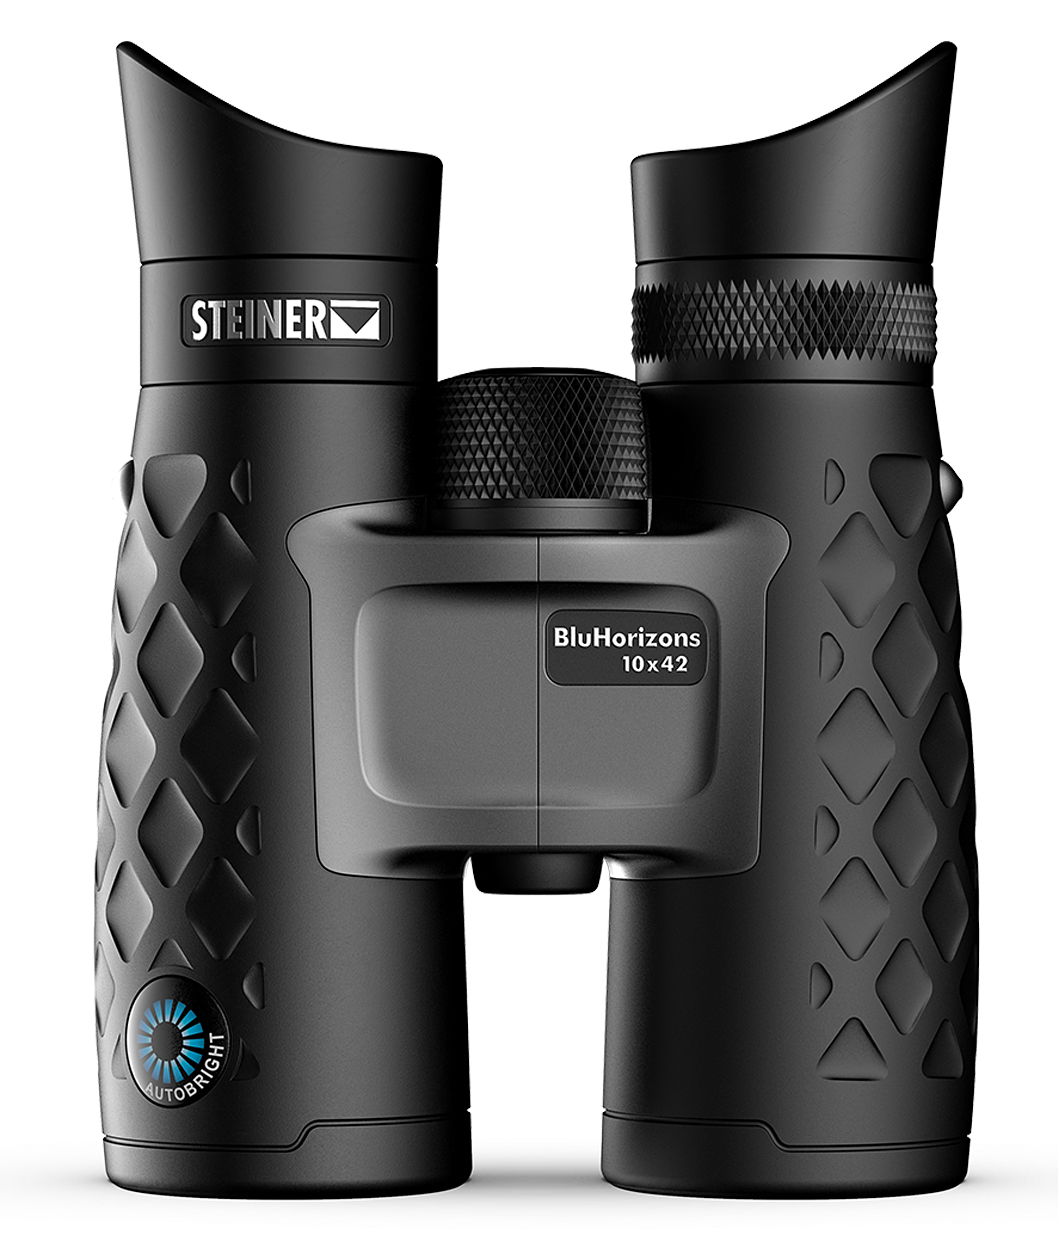 Steiner BluHorizon 10x42 Binoculars